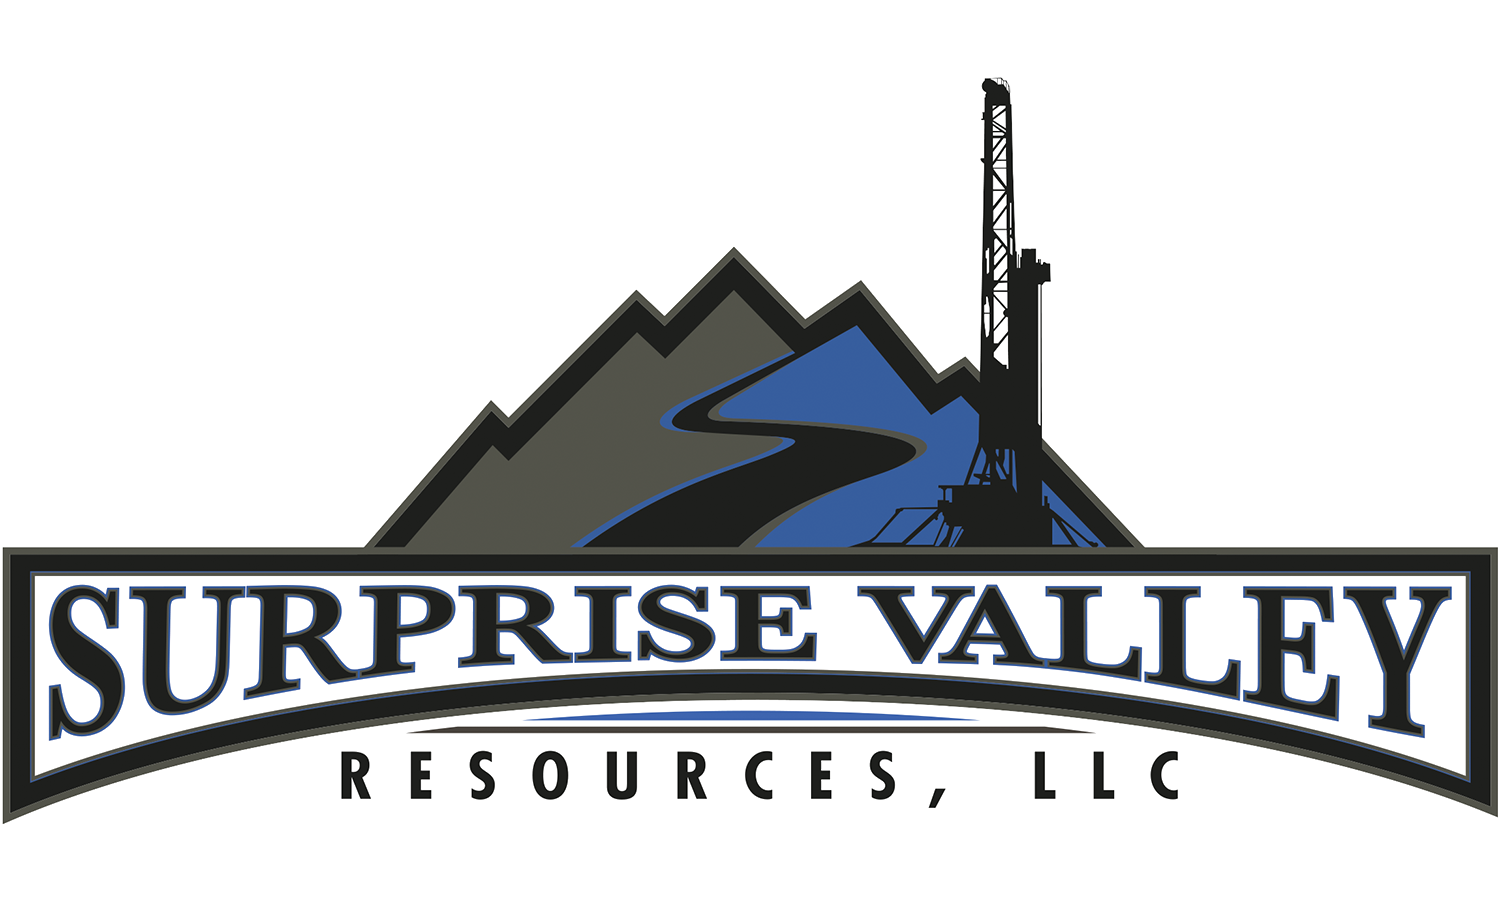 Surprise Valley Resources, LLC